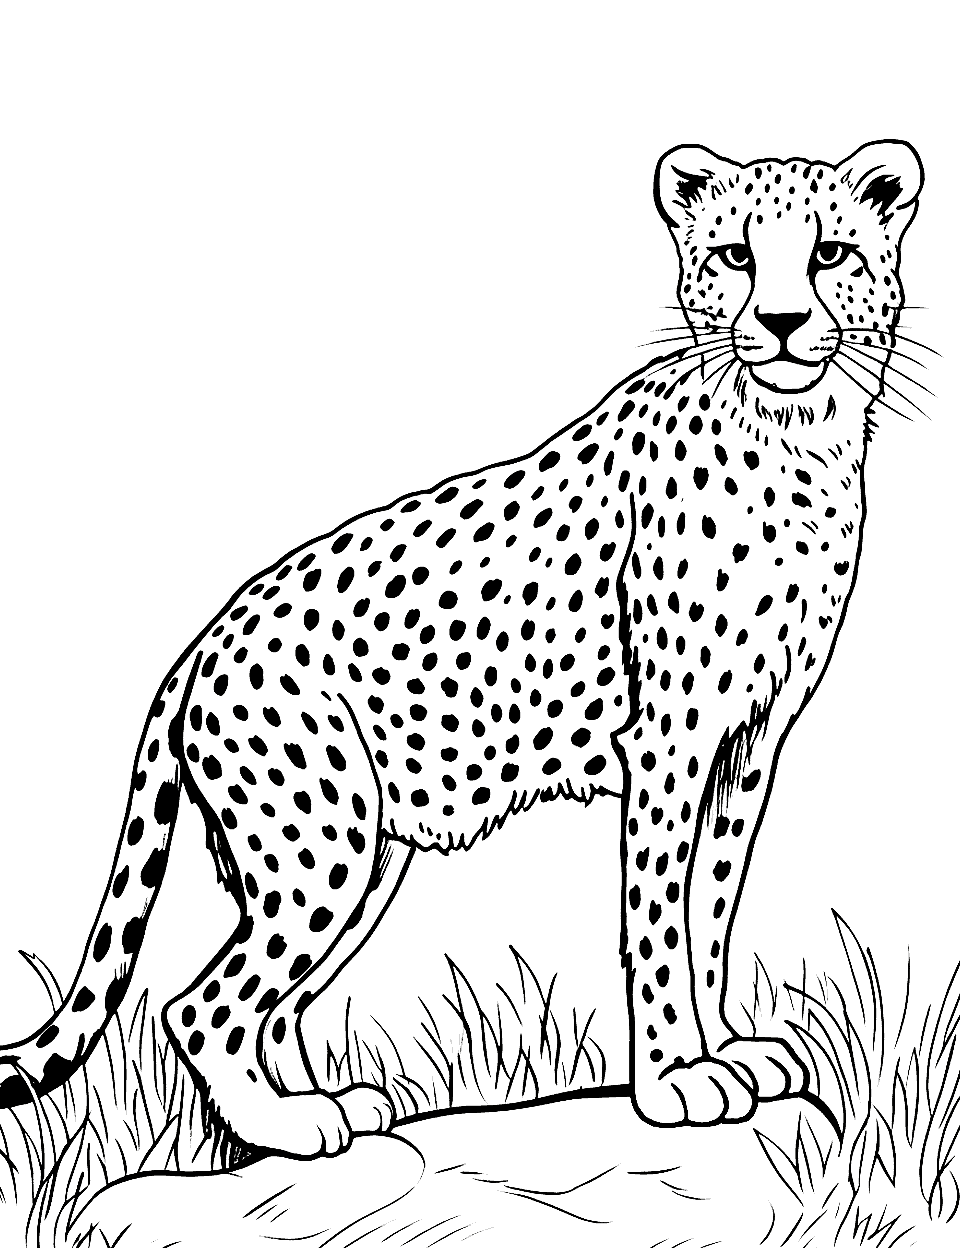 Asiatic Cheetah in Habitat Coloring Page - An Asiatic cheetah in a scene depicting its natural habitat.